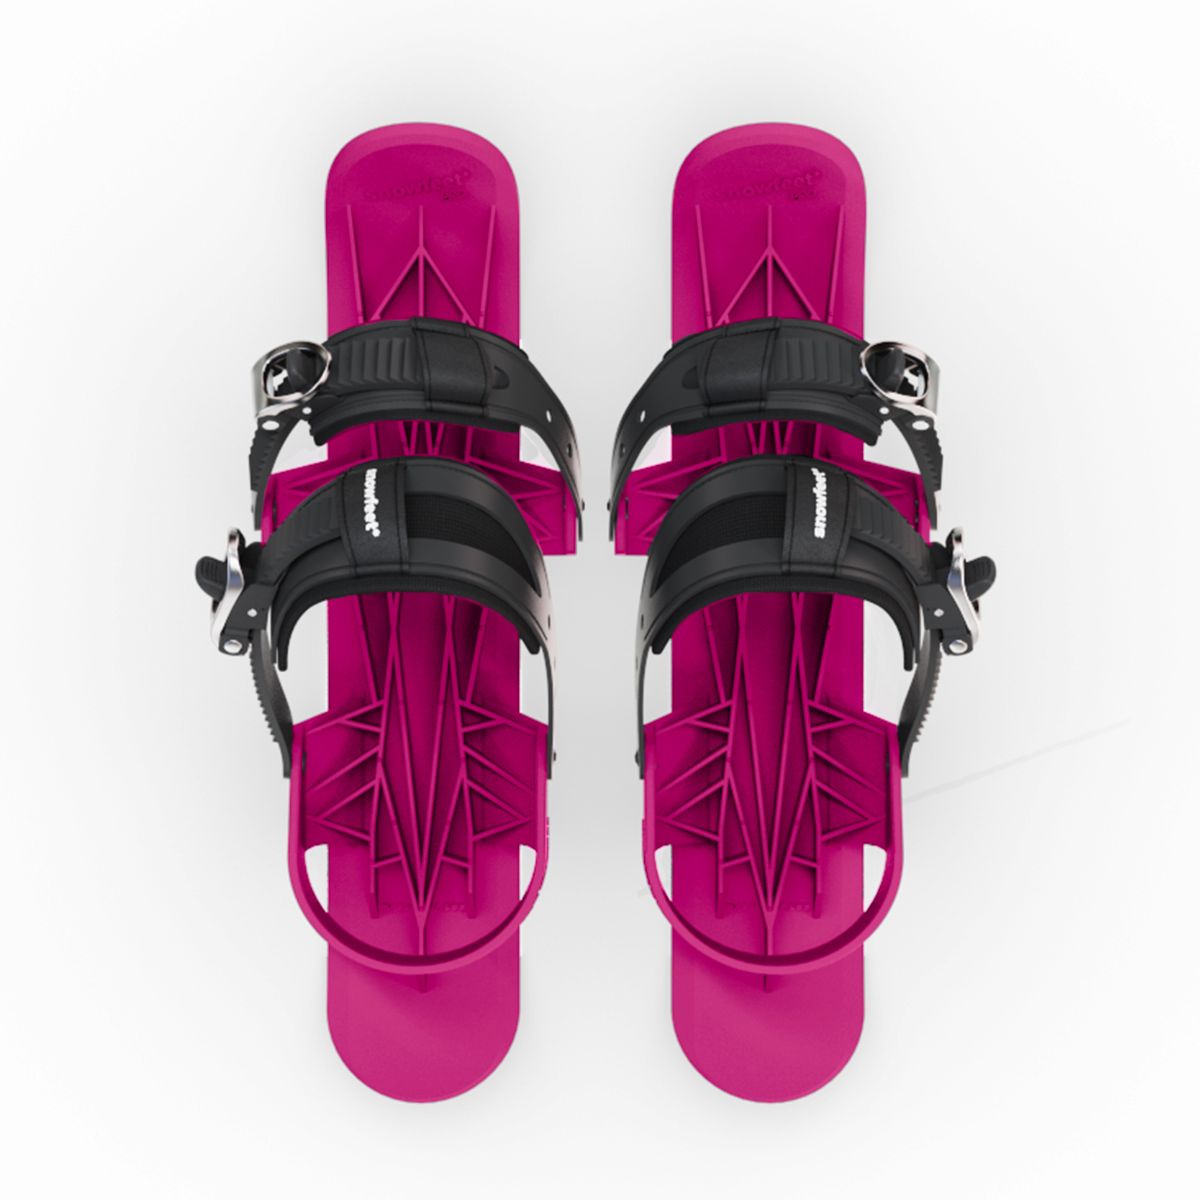  snowfeet pro mini ski skates for snow snowskates skiskates skating ski short ski mini skiskate for snow snowfeet new model best model #color_pink